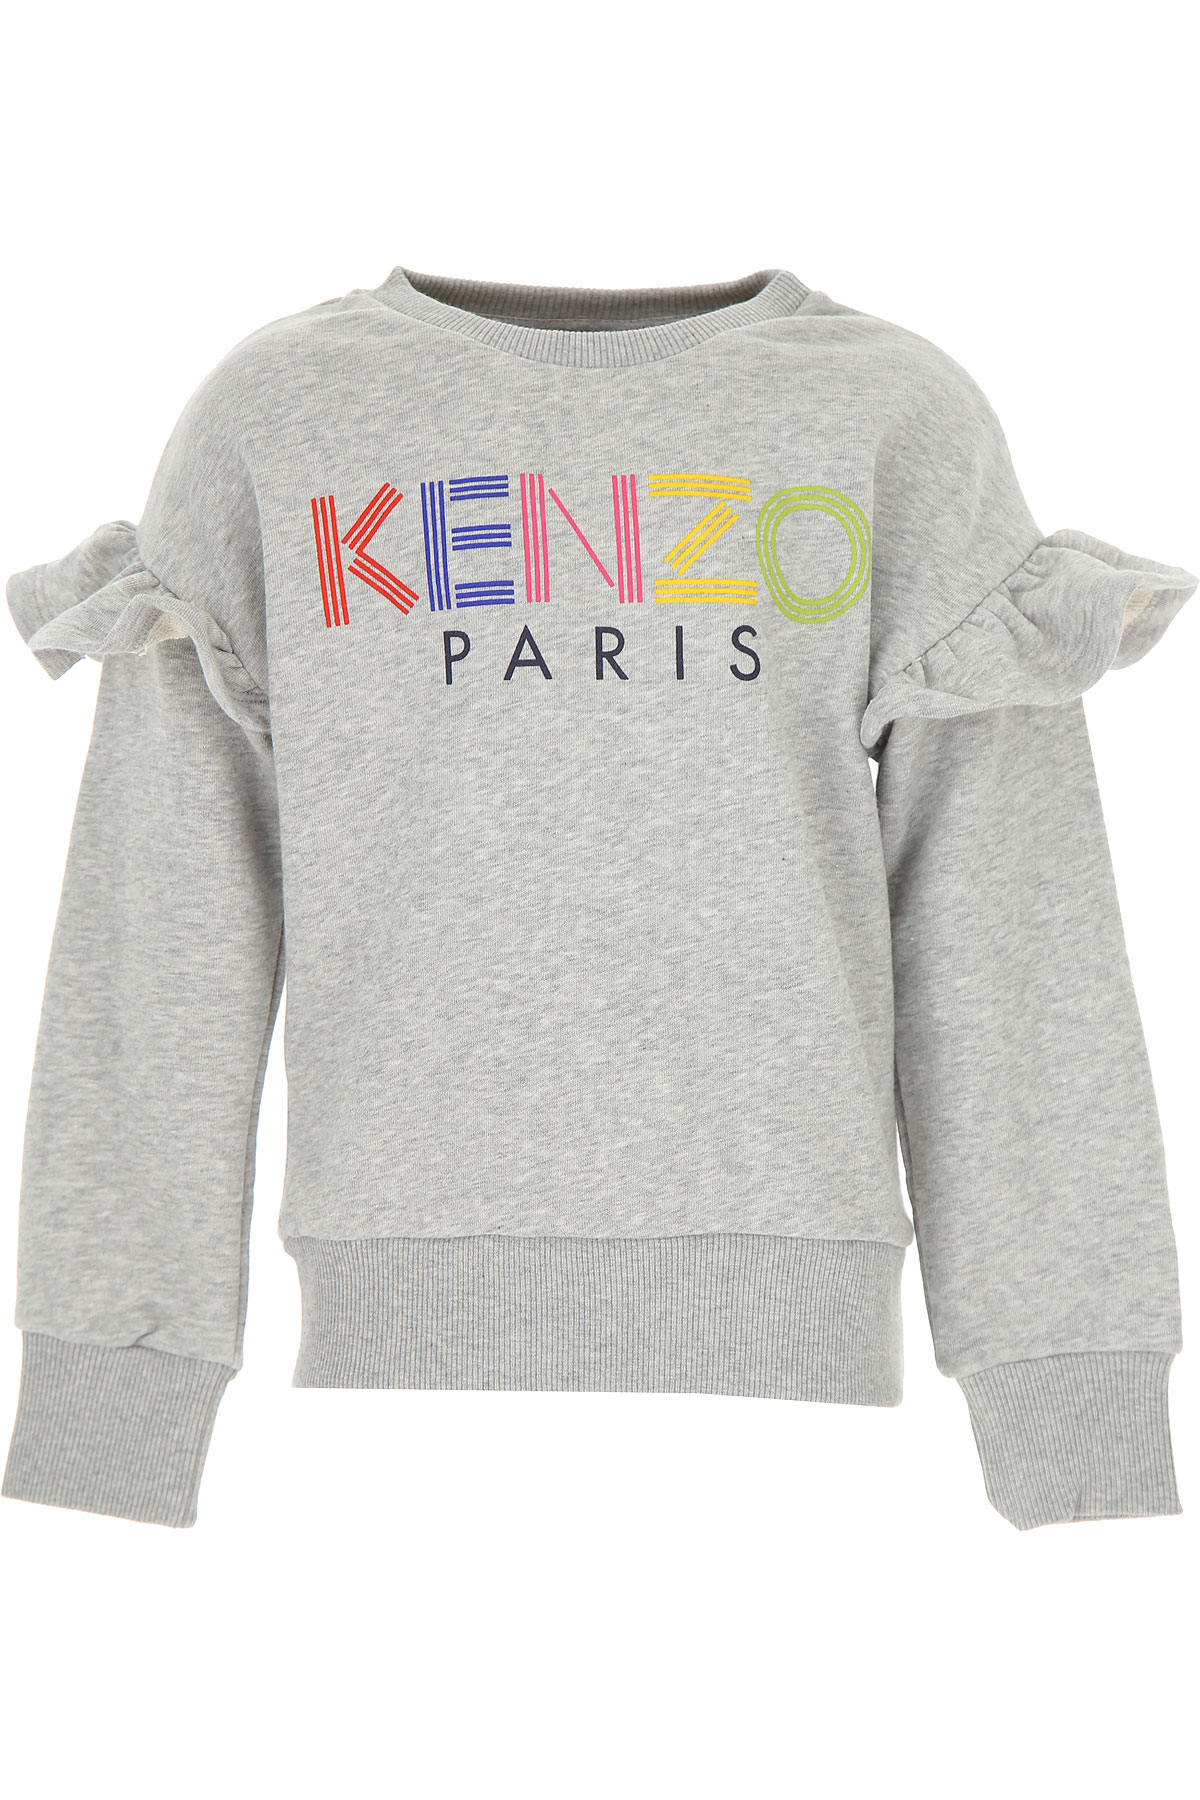 Kenzo Kinder Sweatshirt & Kapuzenpullover für Mädchen Günstig im Sale, Grau, Baumwolle, 2017, 10Y 12Y 14Y 2Y 8Y